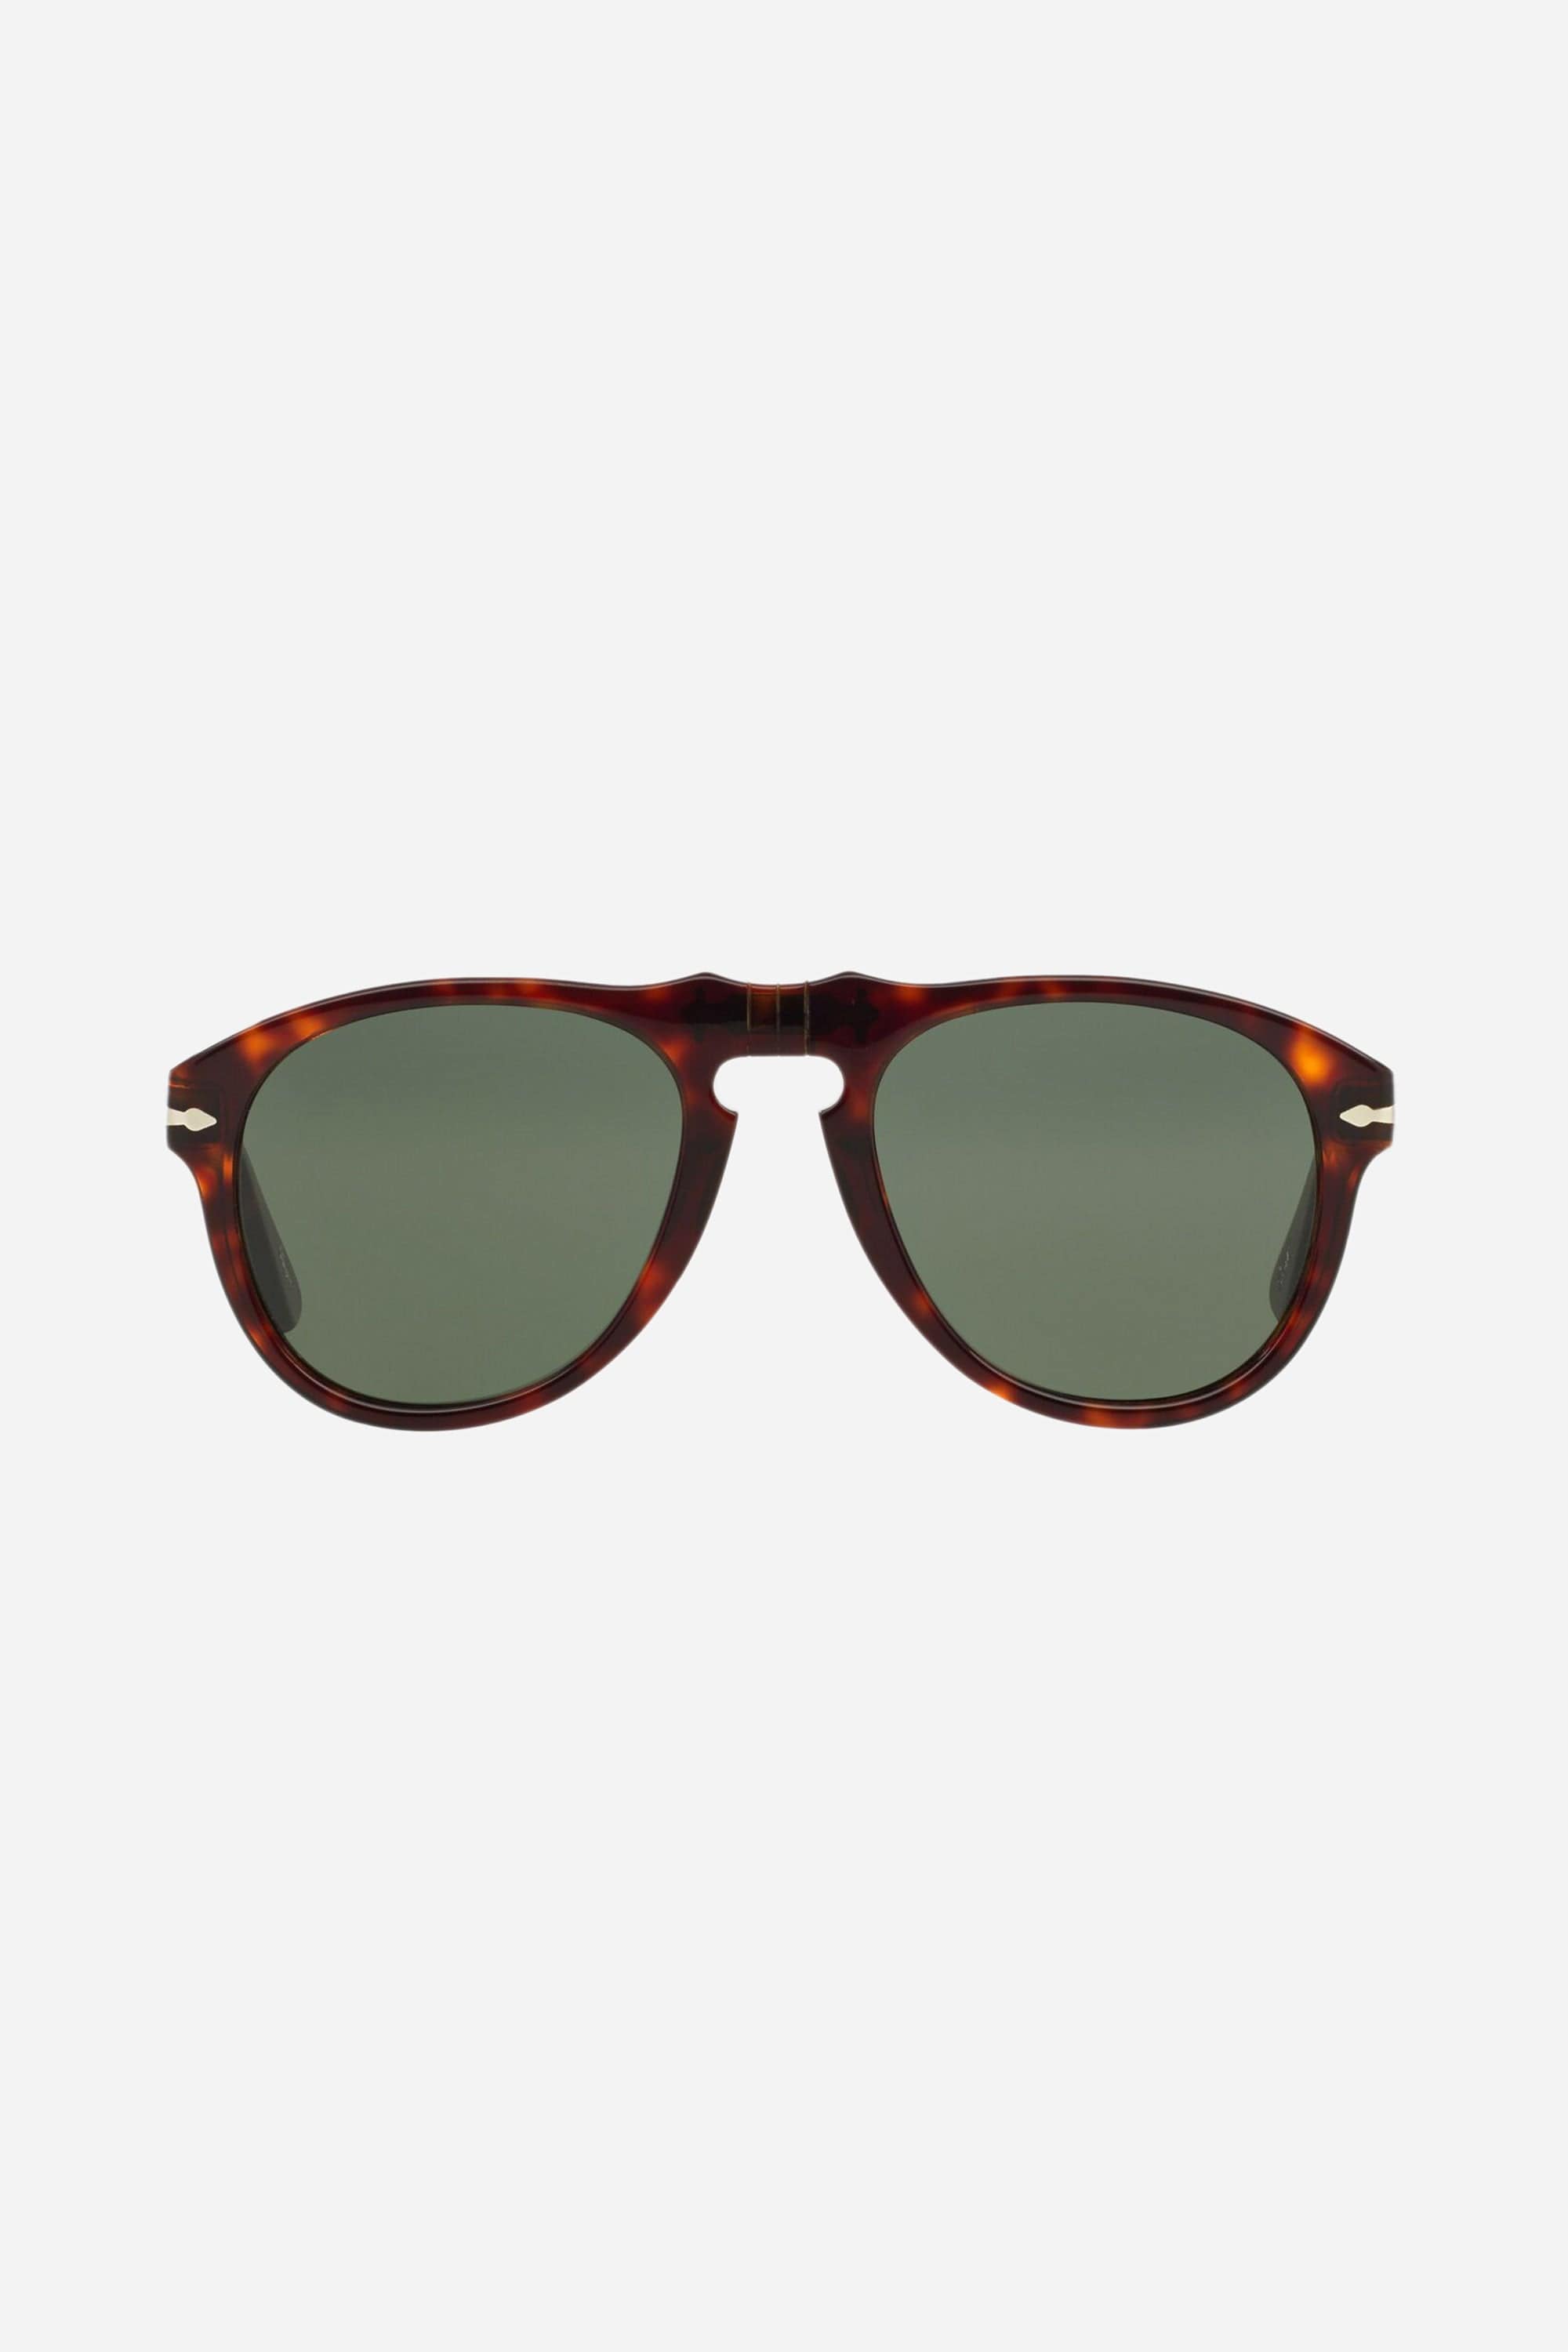 Persol pilot dark havana sunglasses - Eyewear Club